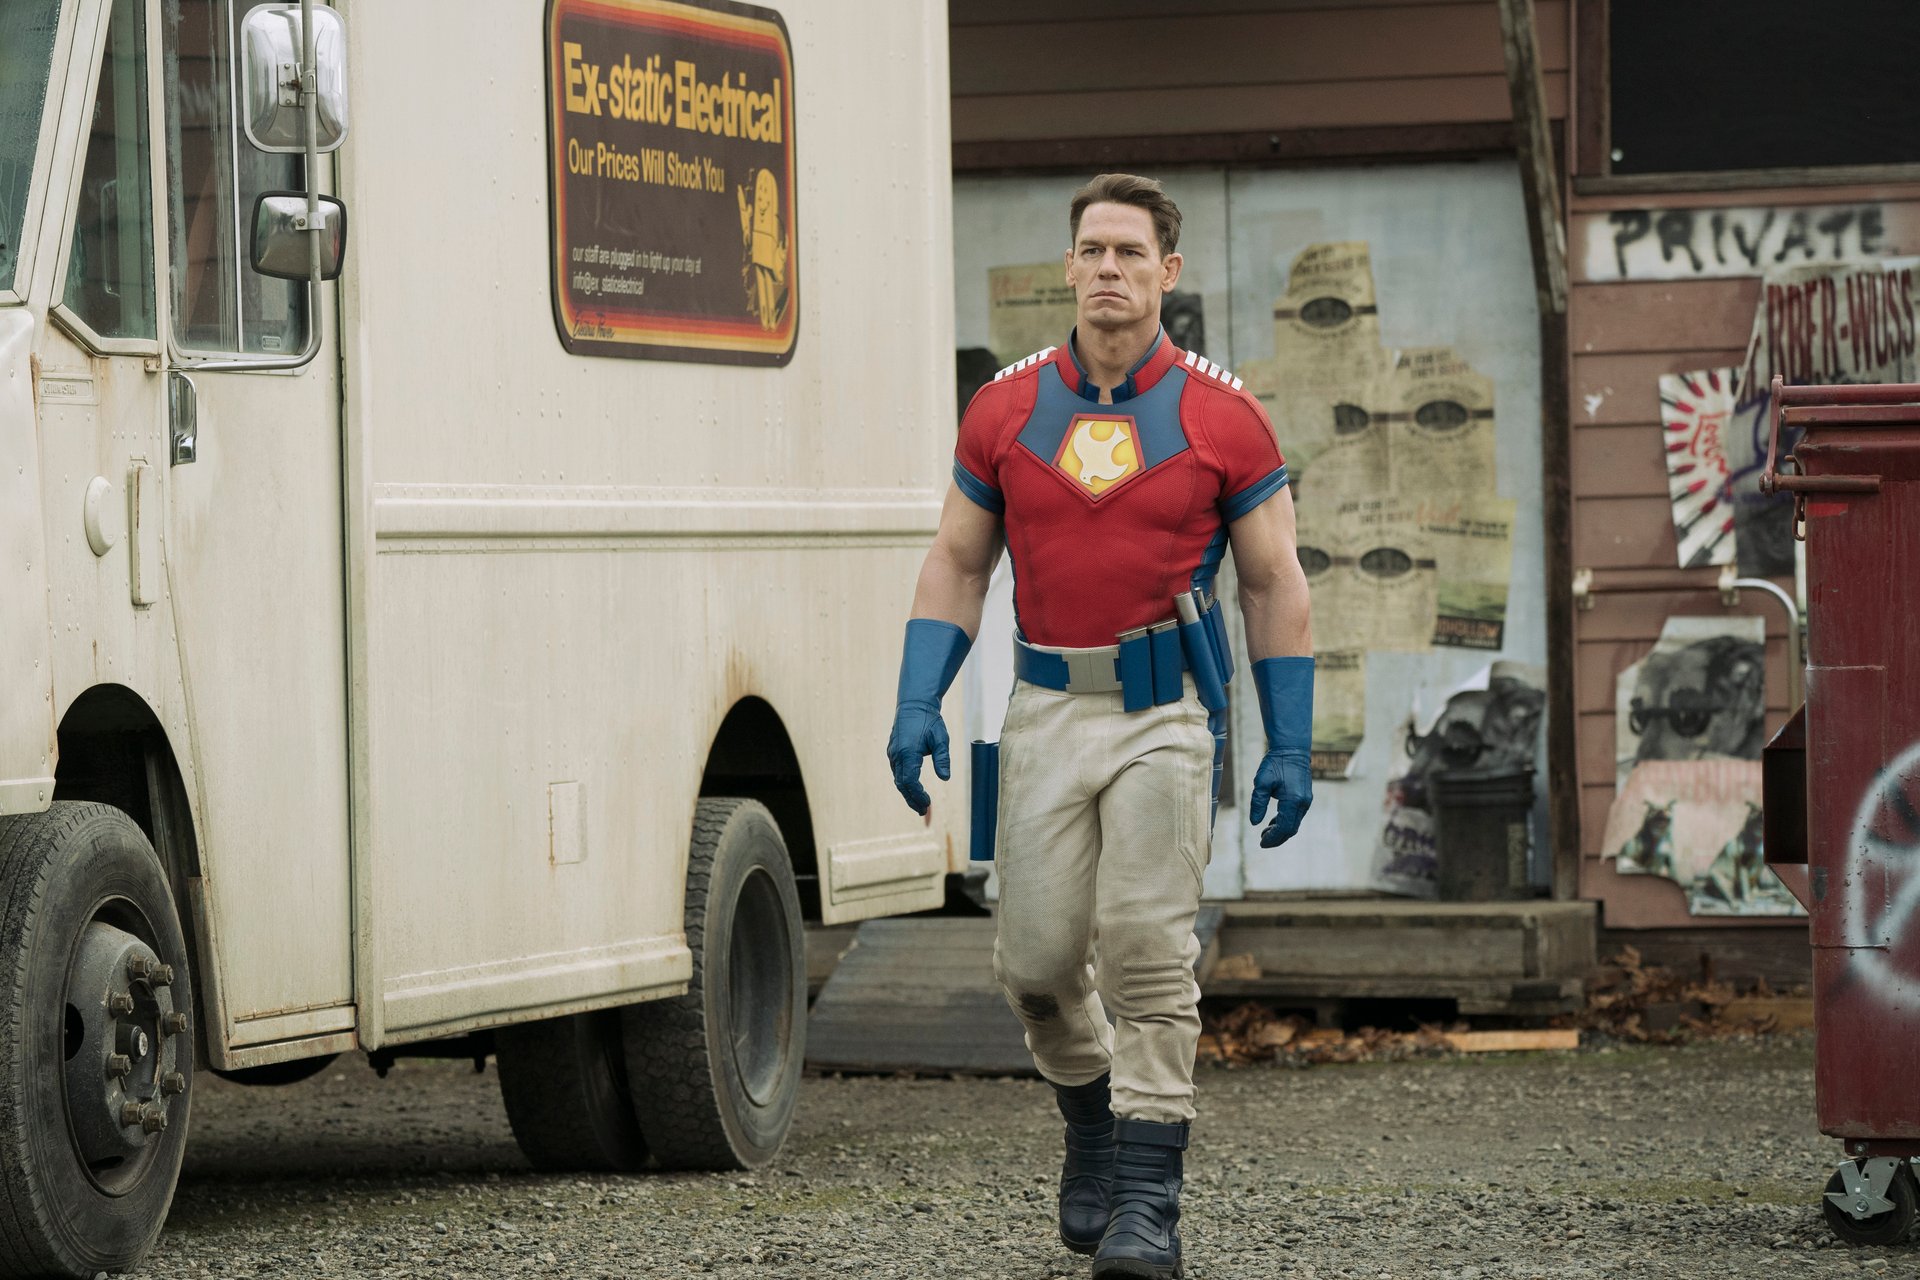 John Cena as Peacemaker in 'Peacemaker' Episode 4. He's walking next to a van.